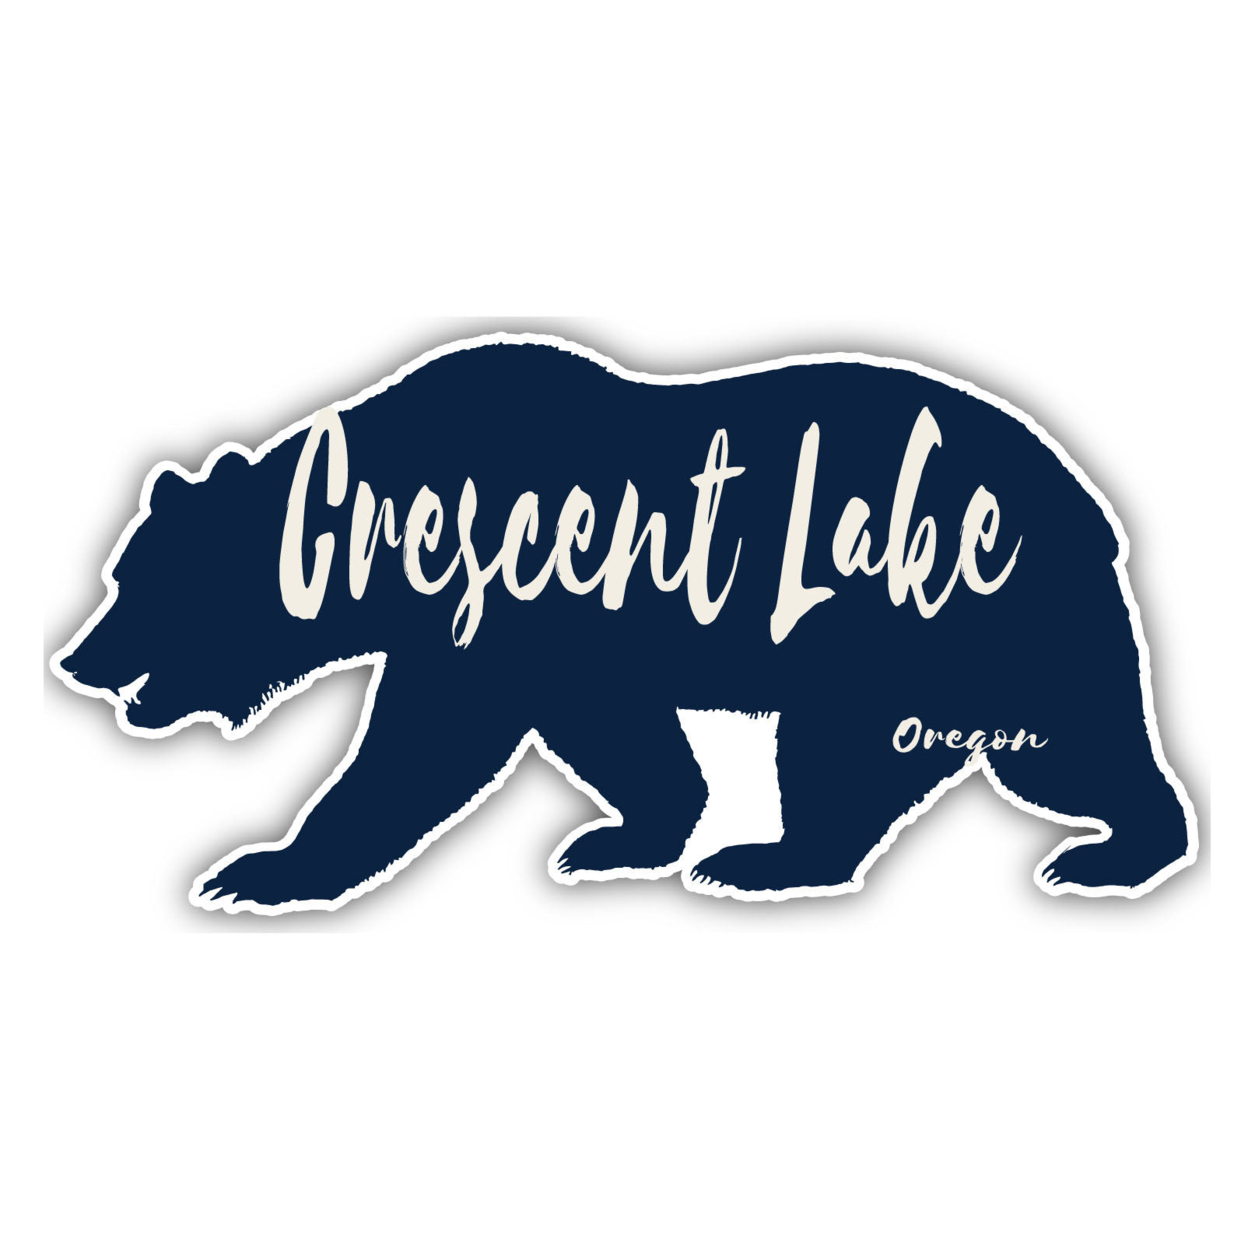 Crescent Lake Oregon Souvenir Decorative Stickers (Choose Theme And Size) - 4-Pack, 6-Inch, Bear